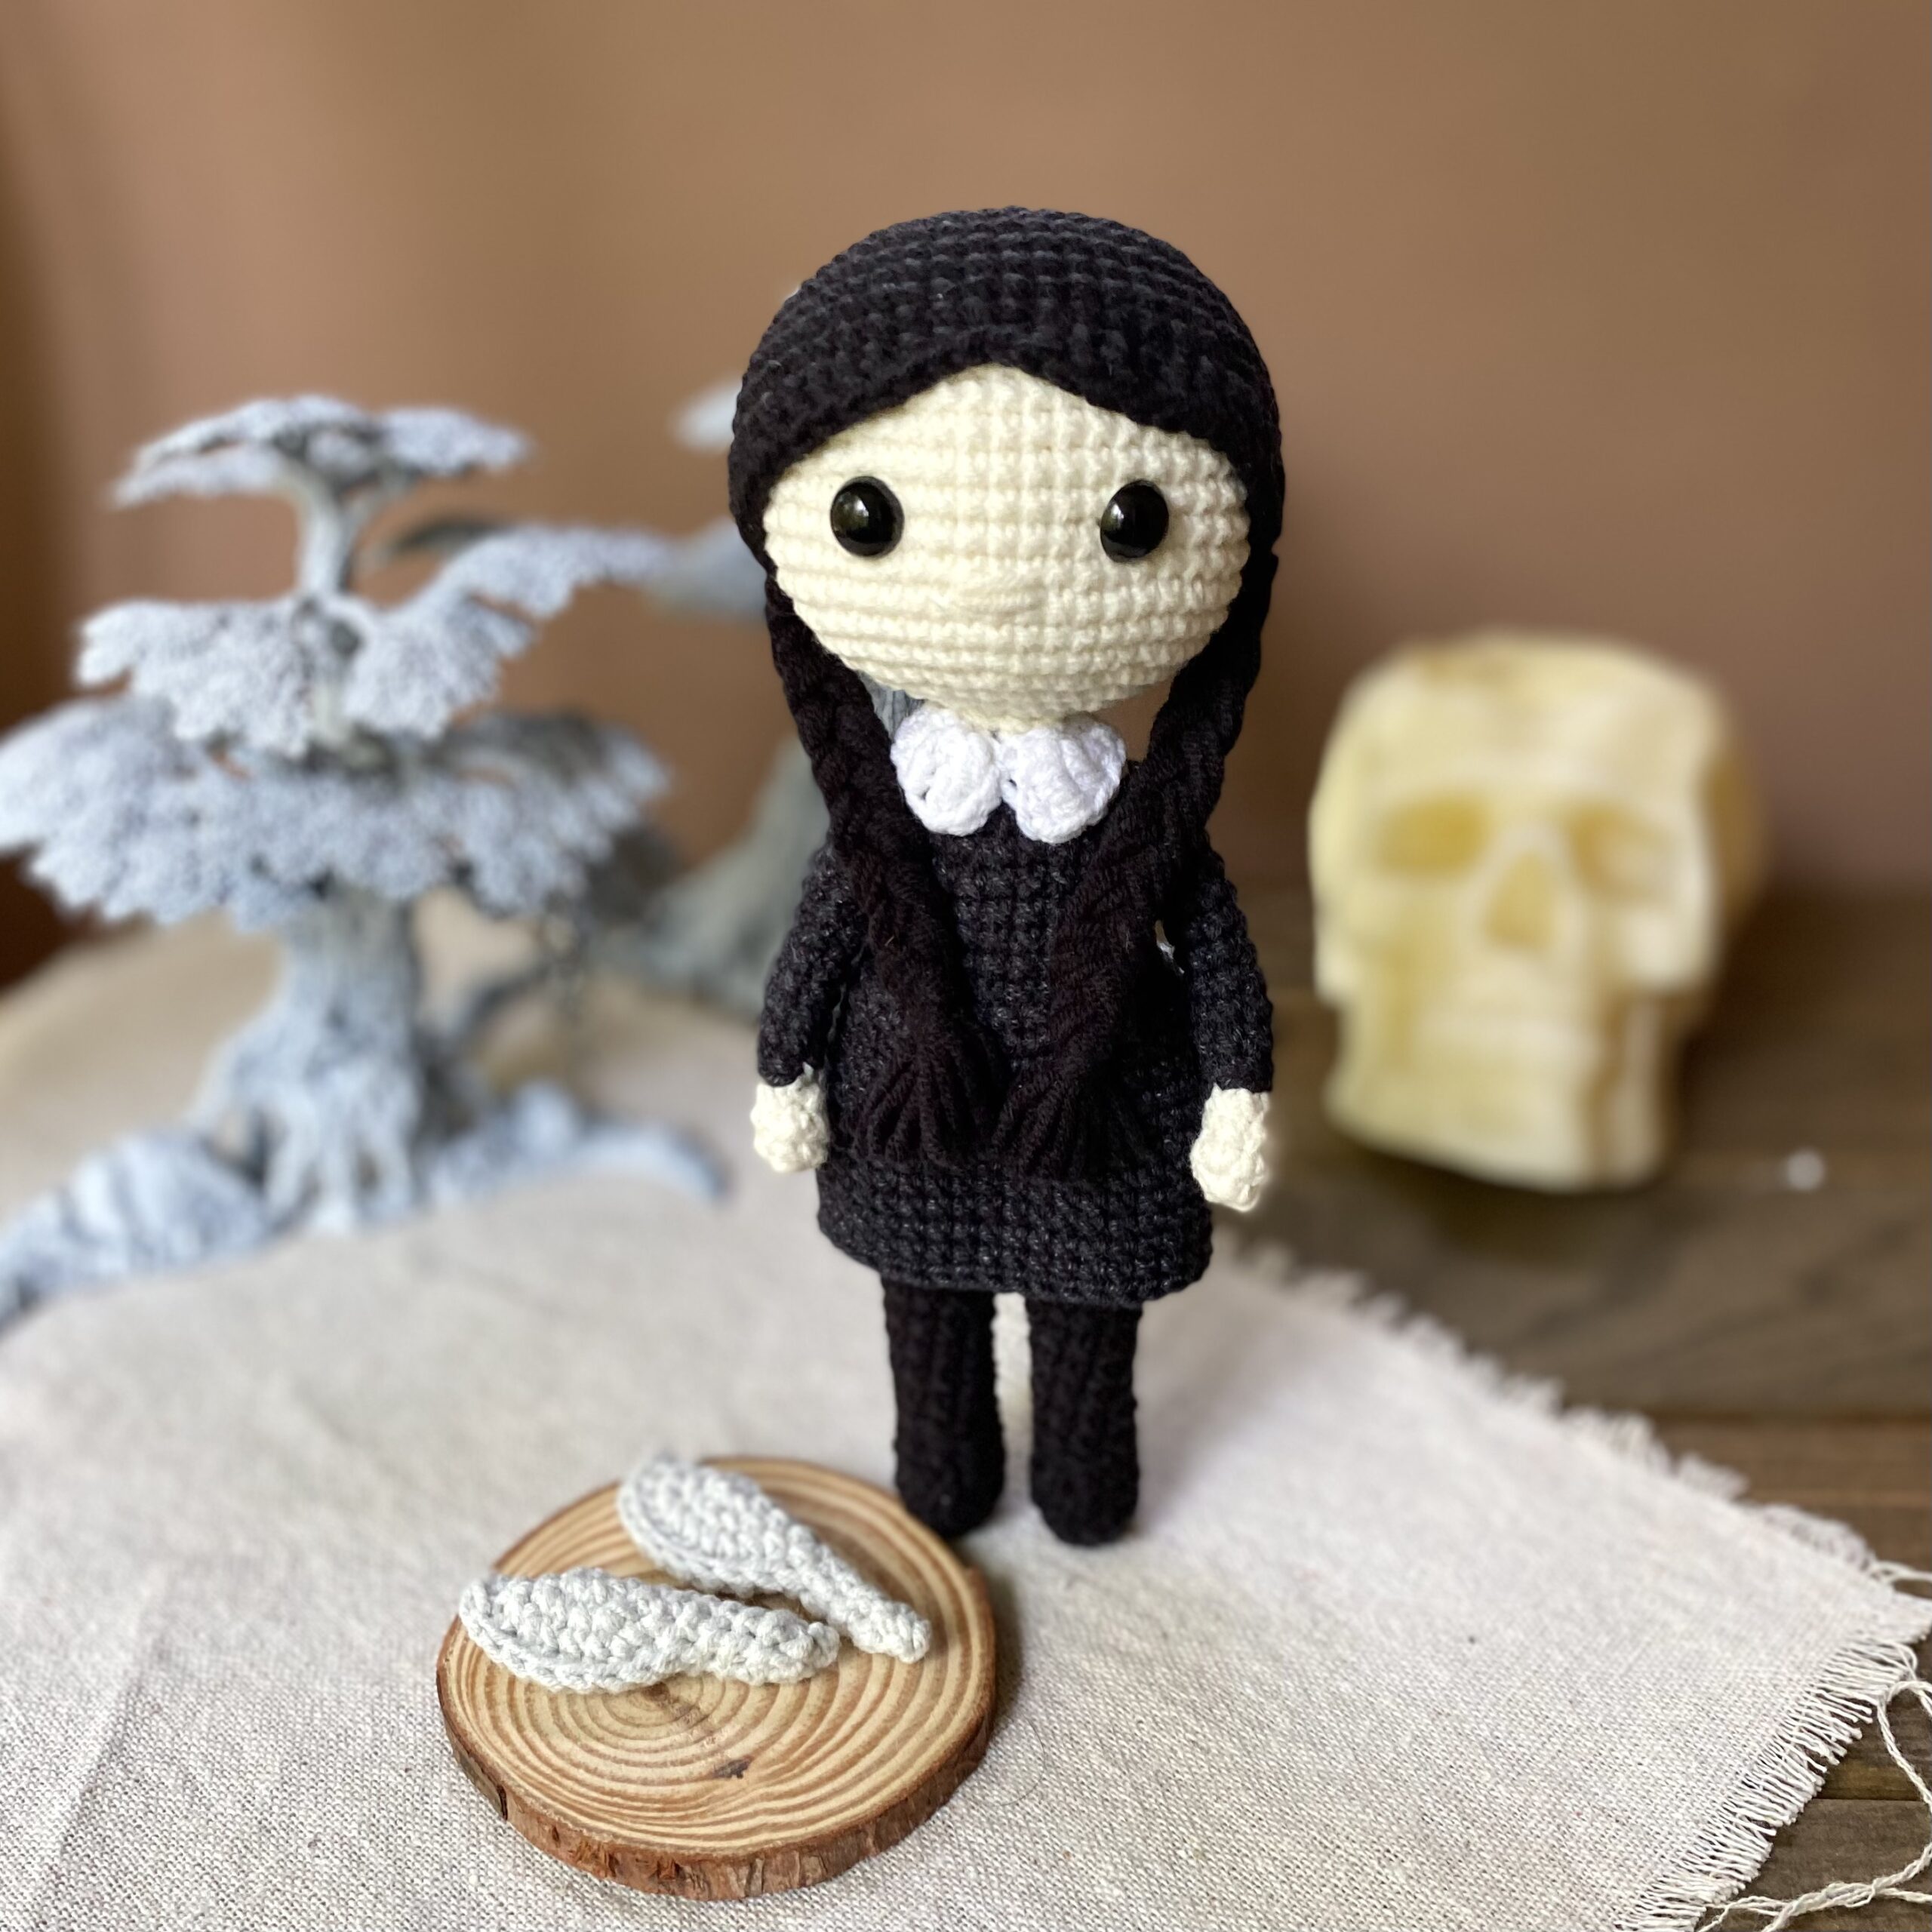 Tutoriel de Crochet Mercredi Addams- amigurumi. 99 % sans couture  d'assemblage